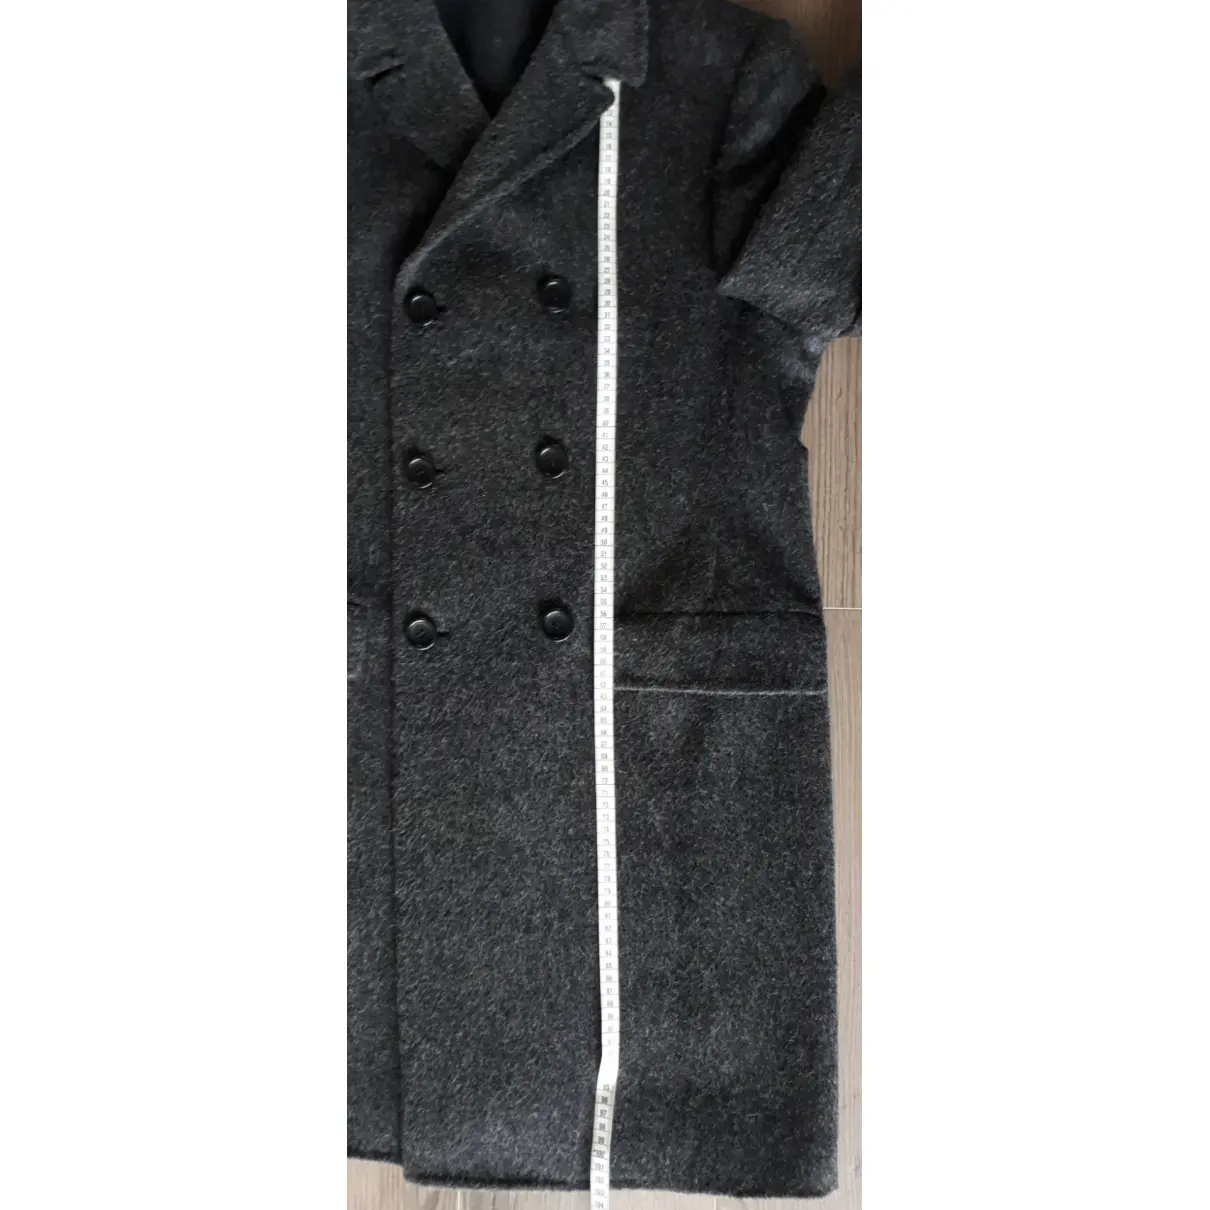 Buy Kenzo Wool coat online